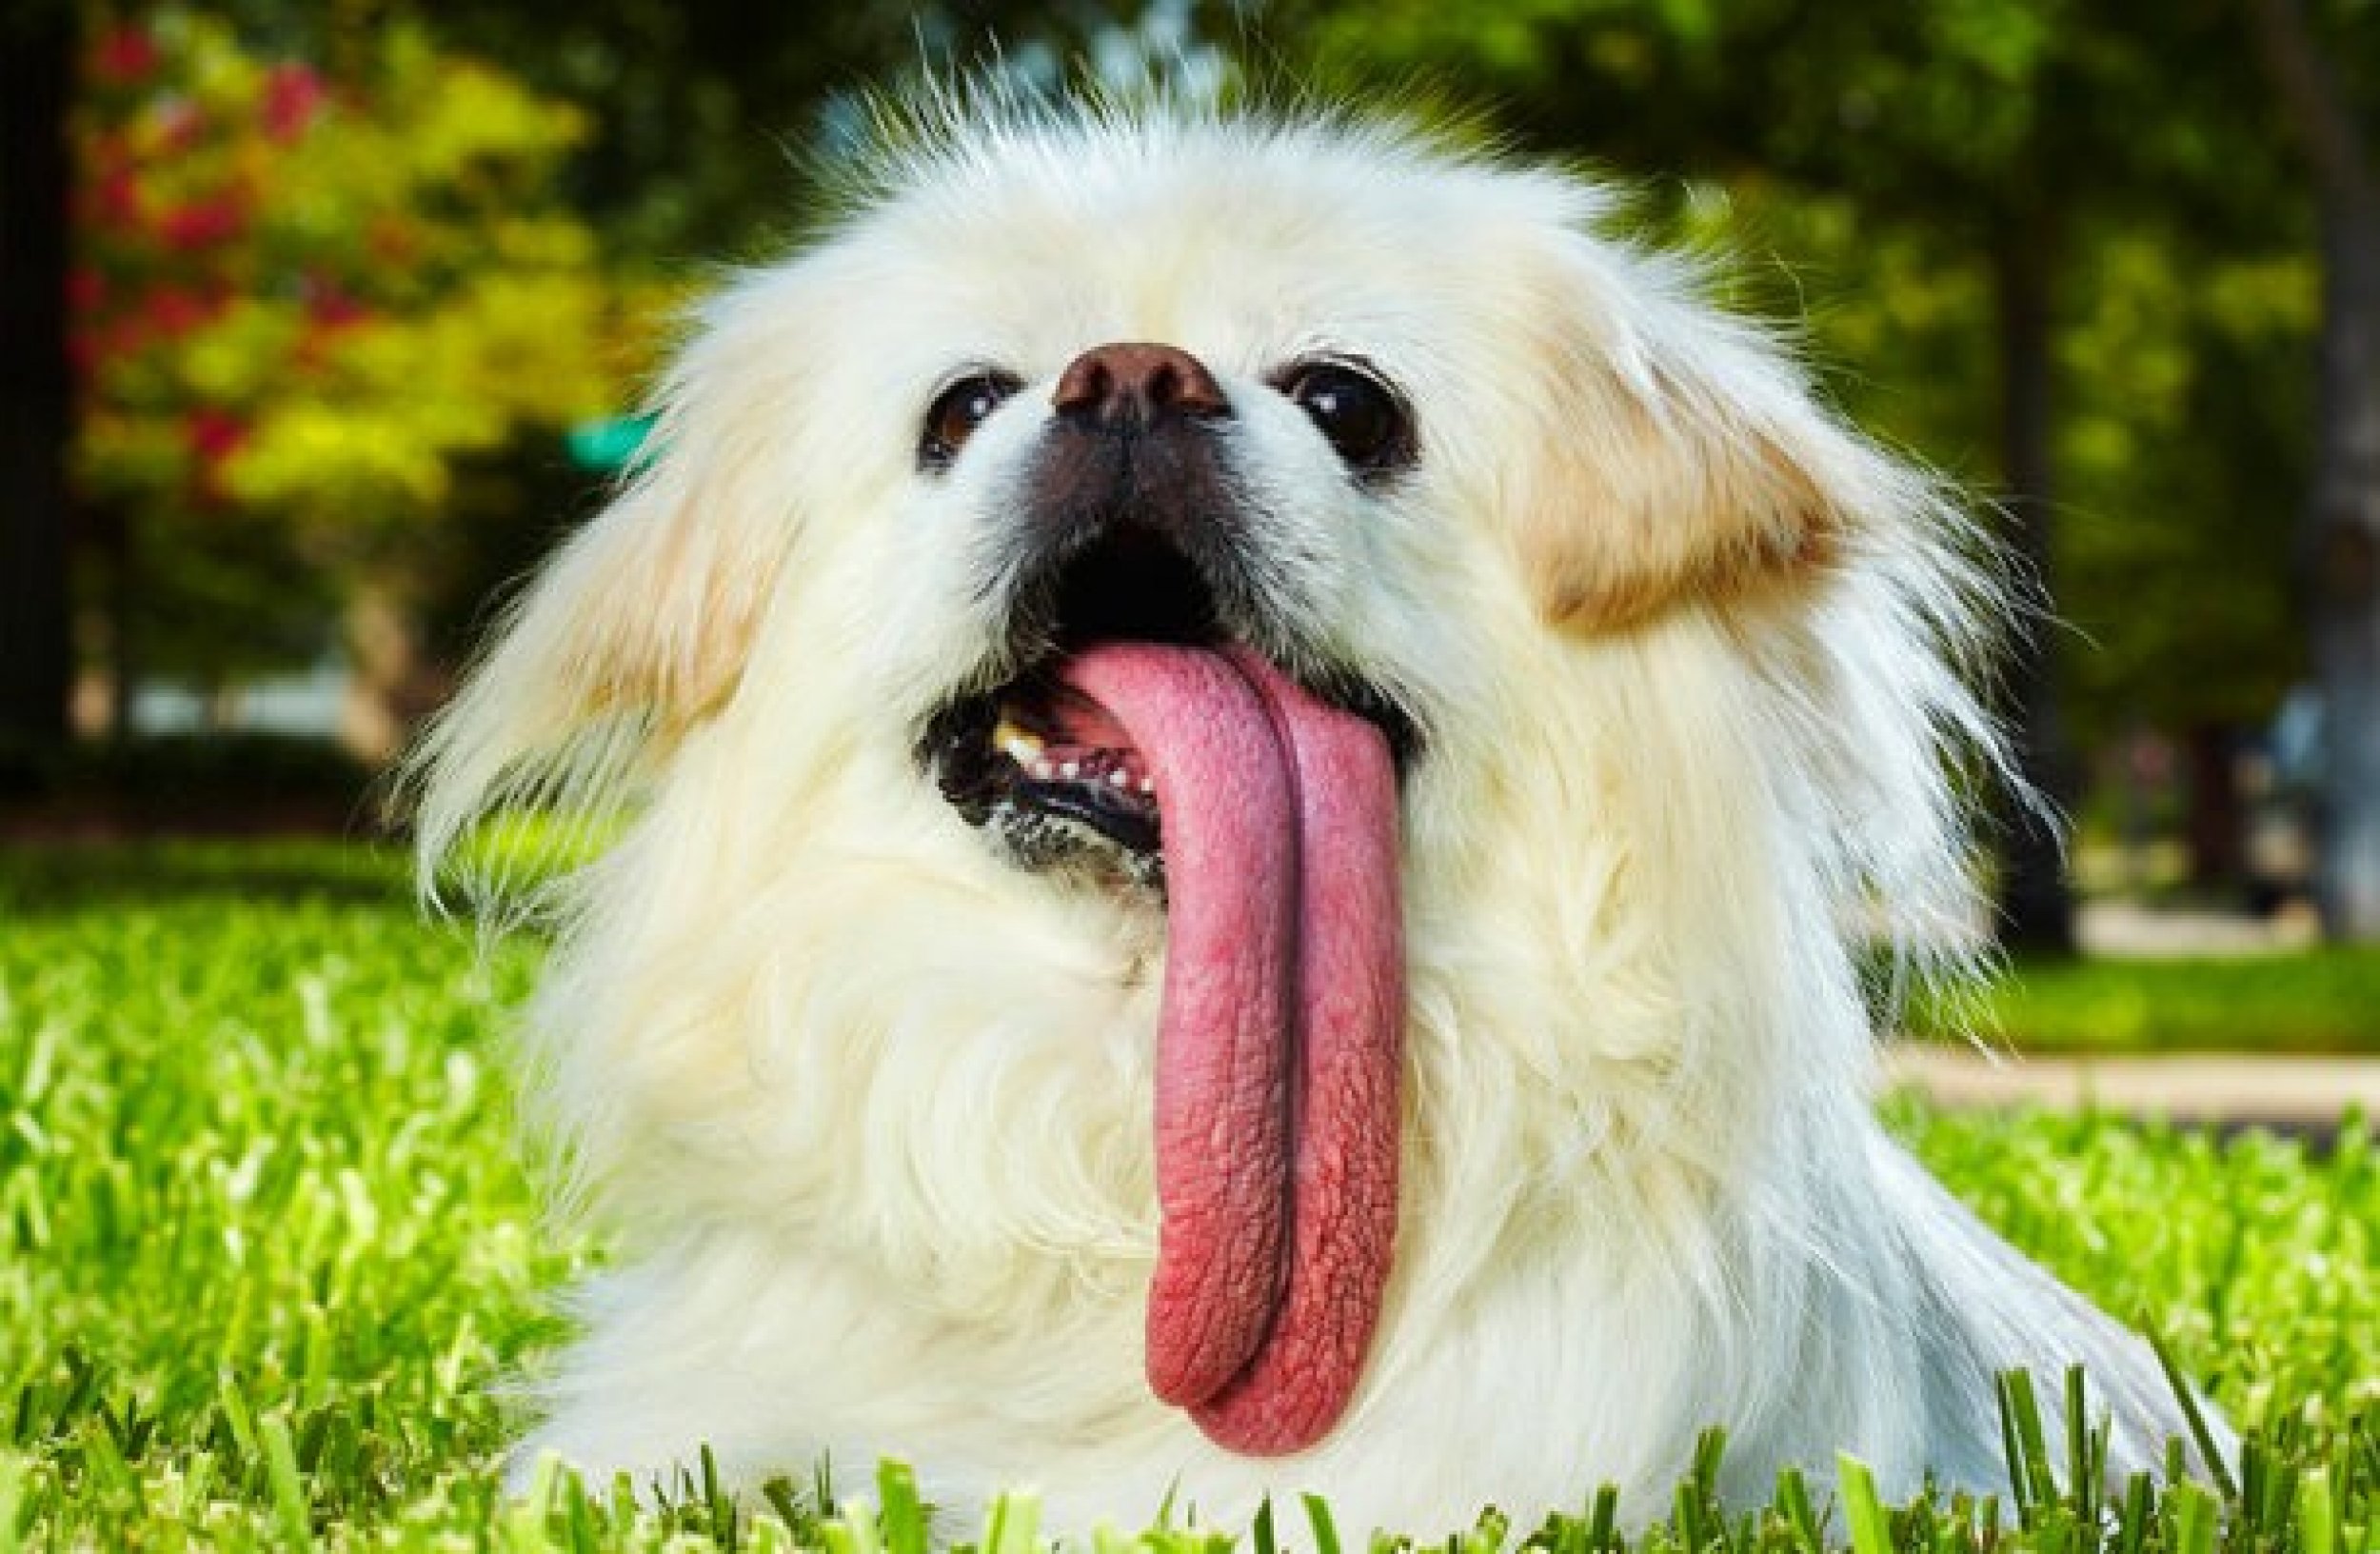 Longest tongue on a dog 